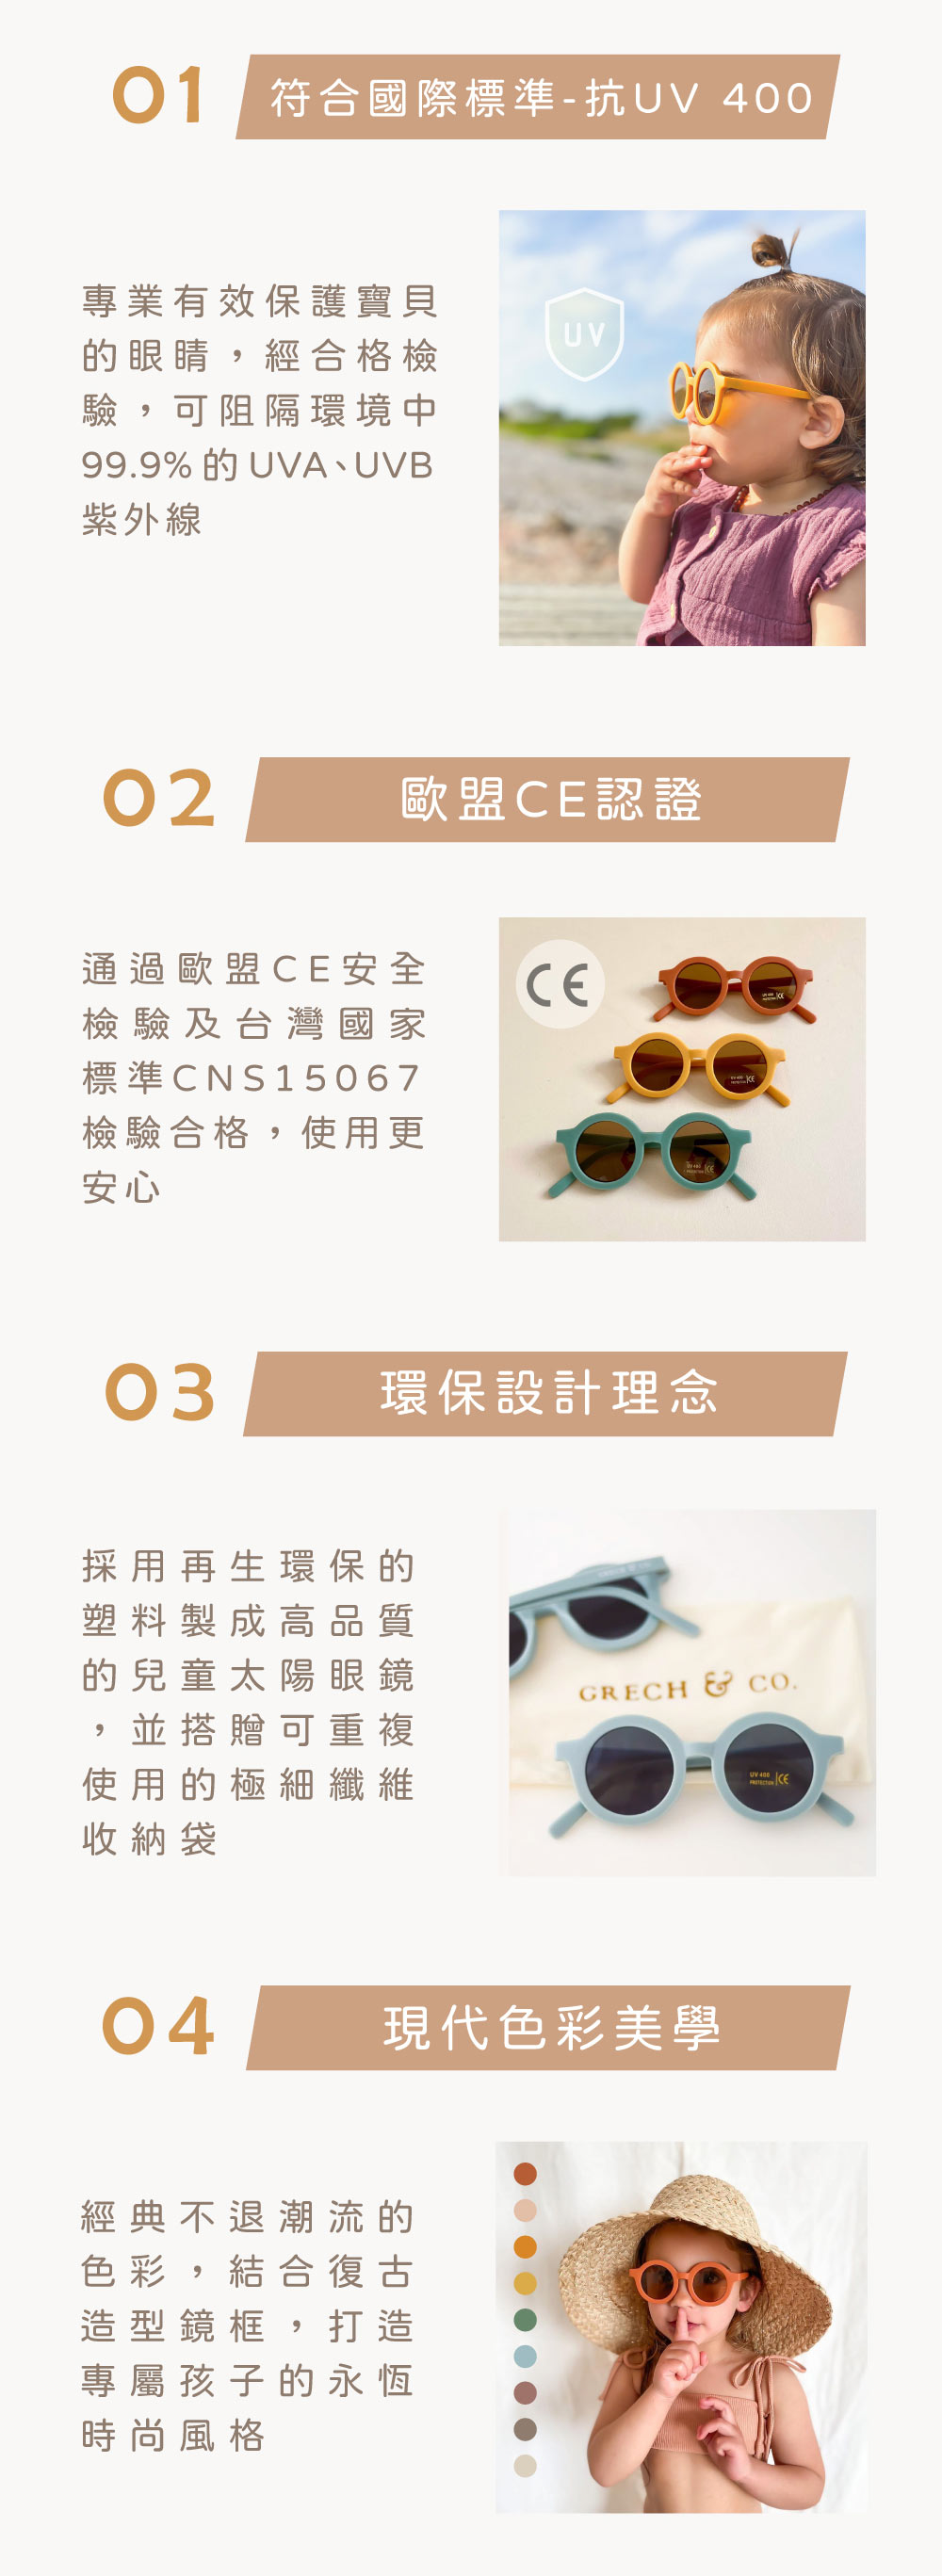 sunglasses02.jpg